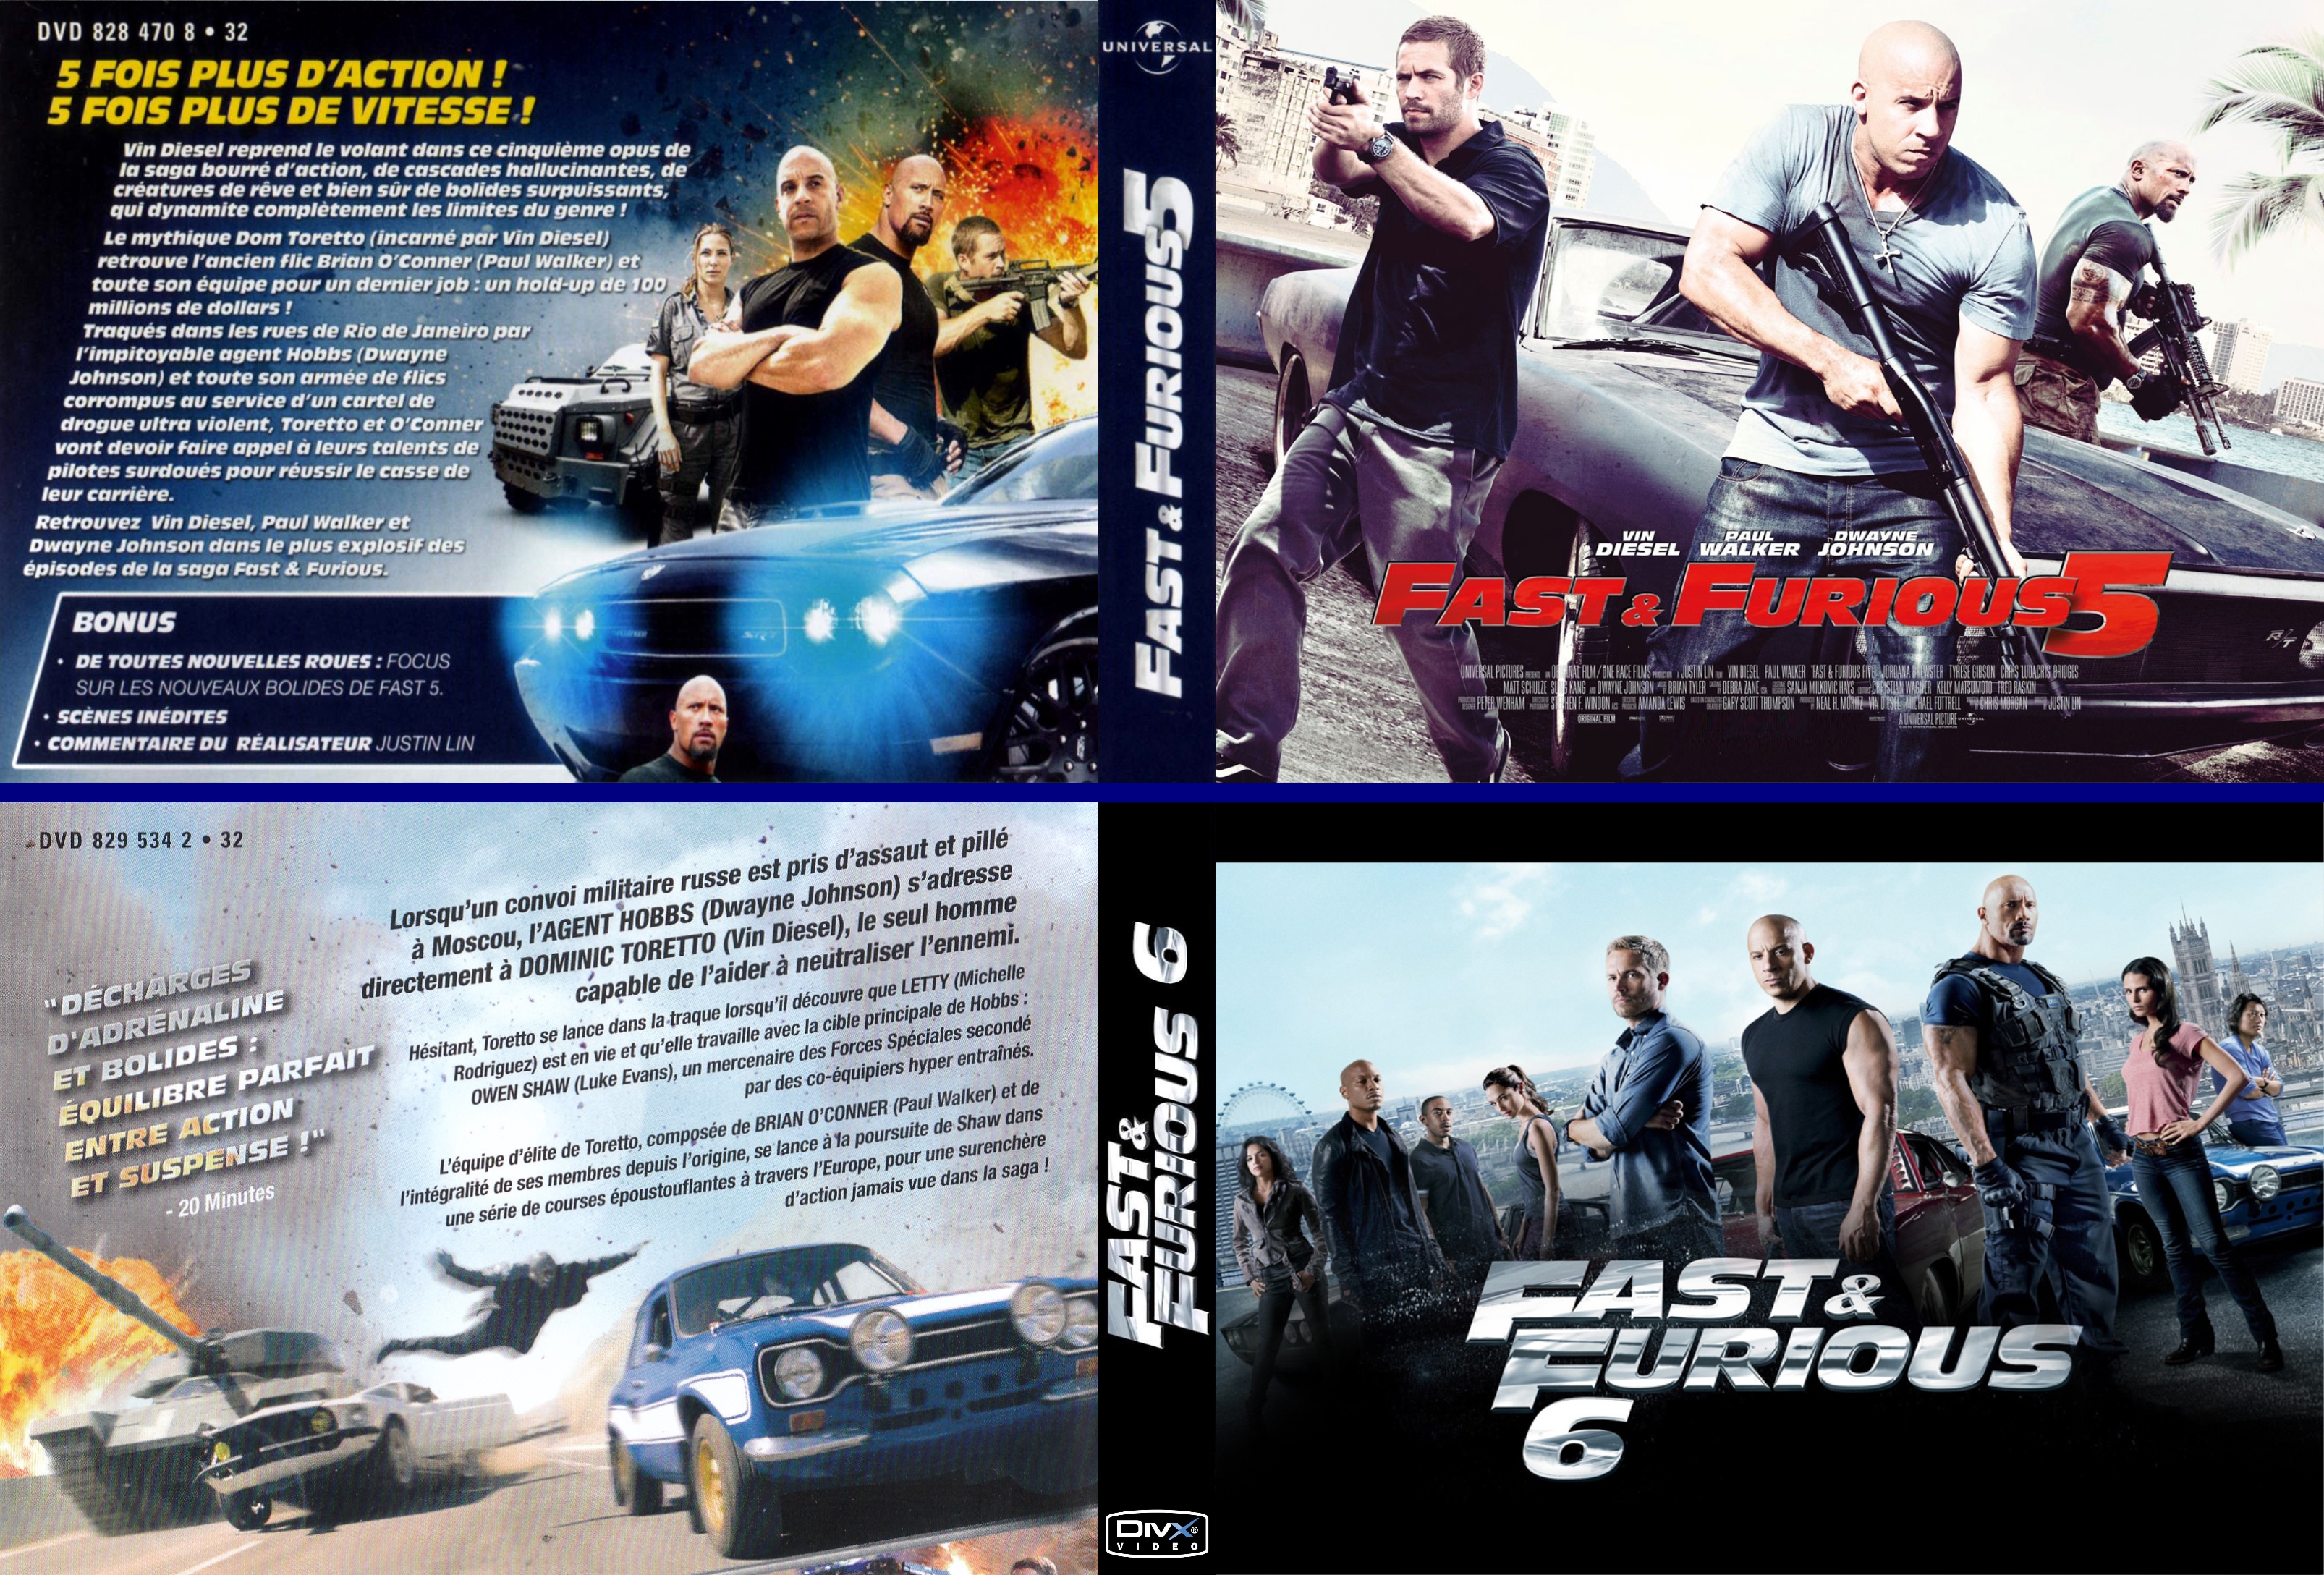 Jaquette DVD Fast & Furious 5 & 6 custom